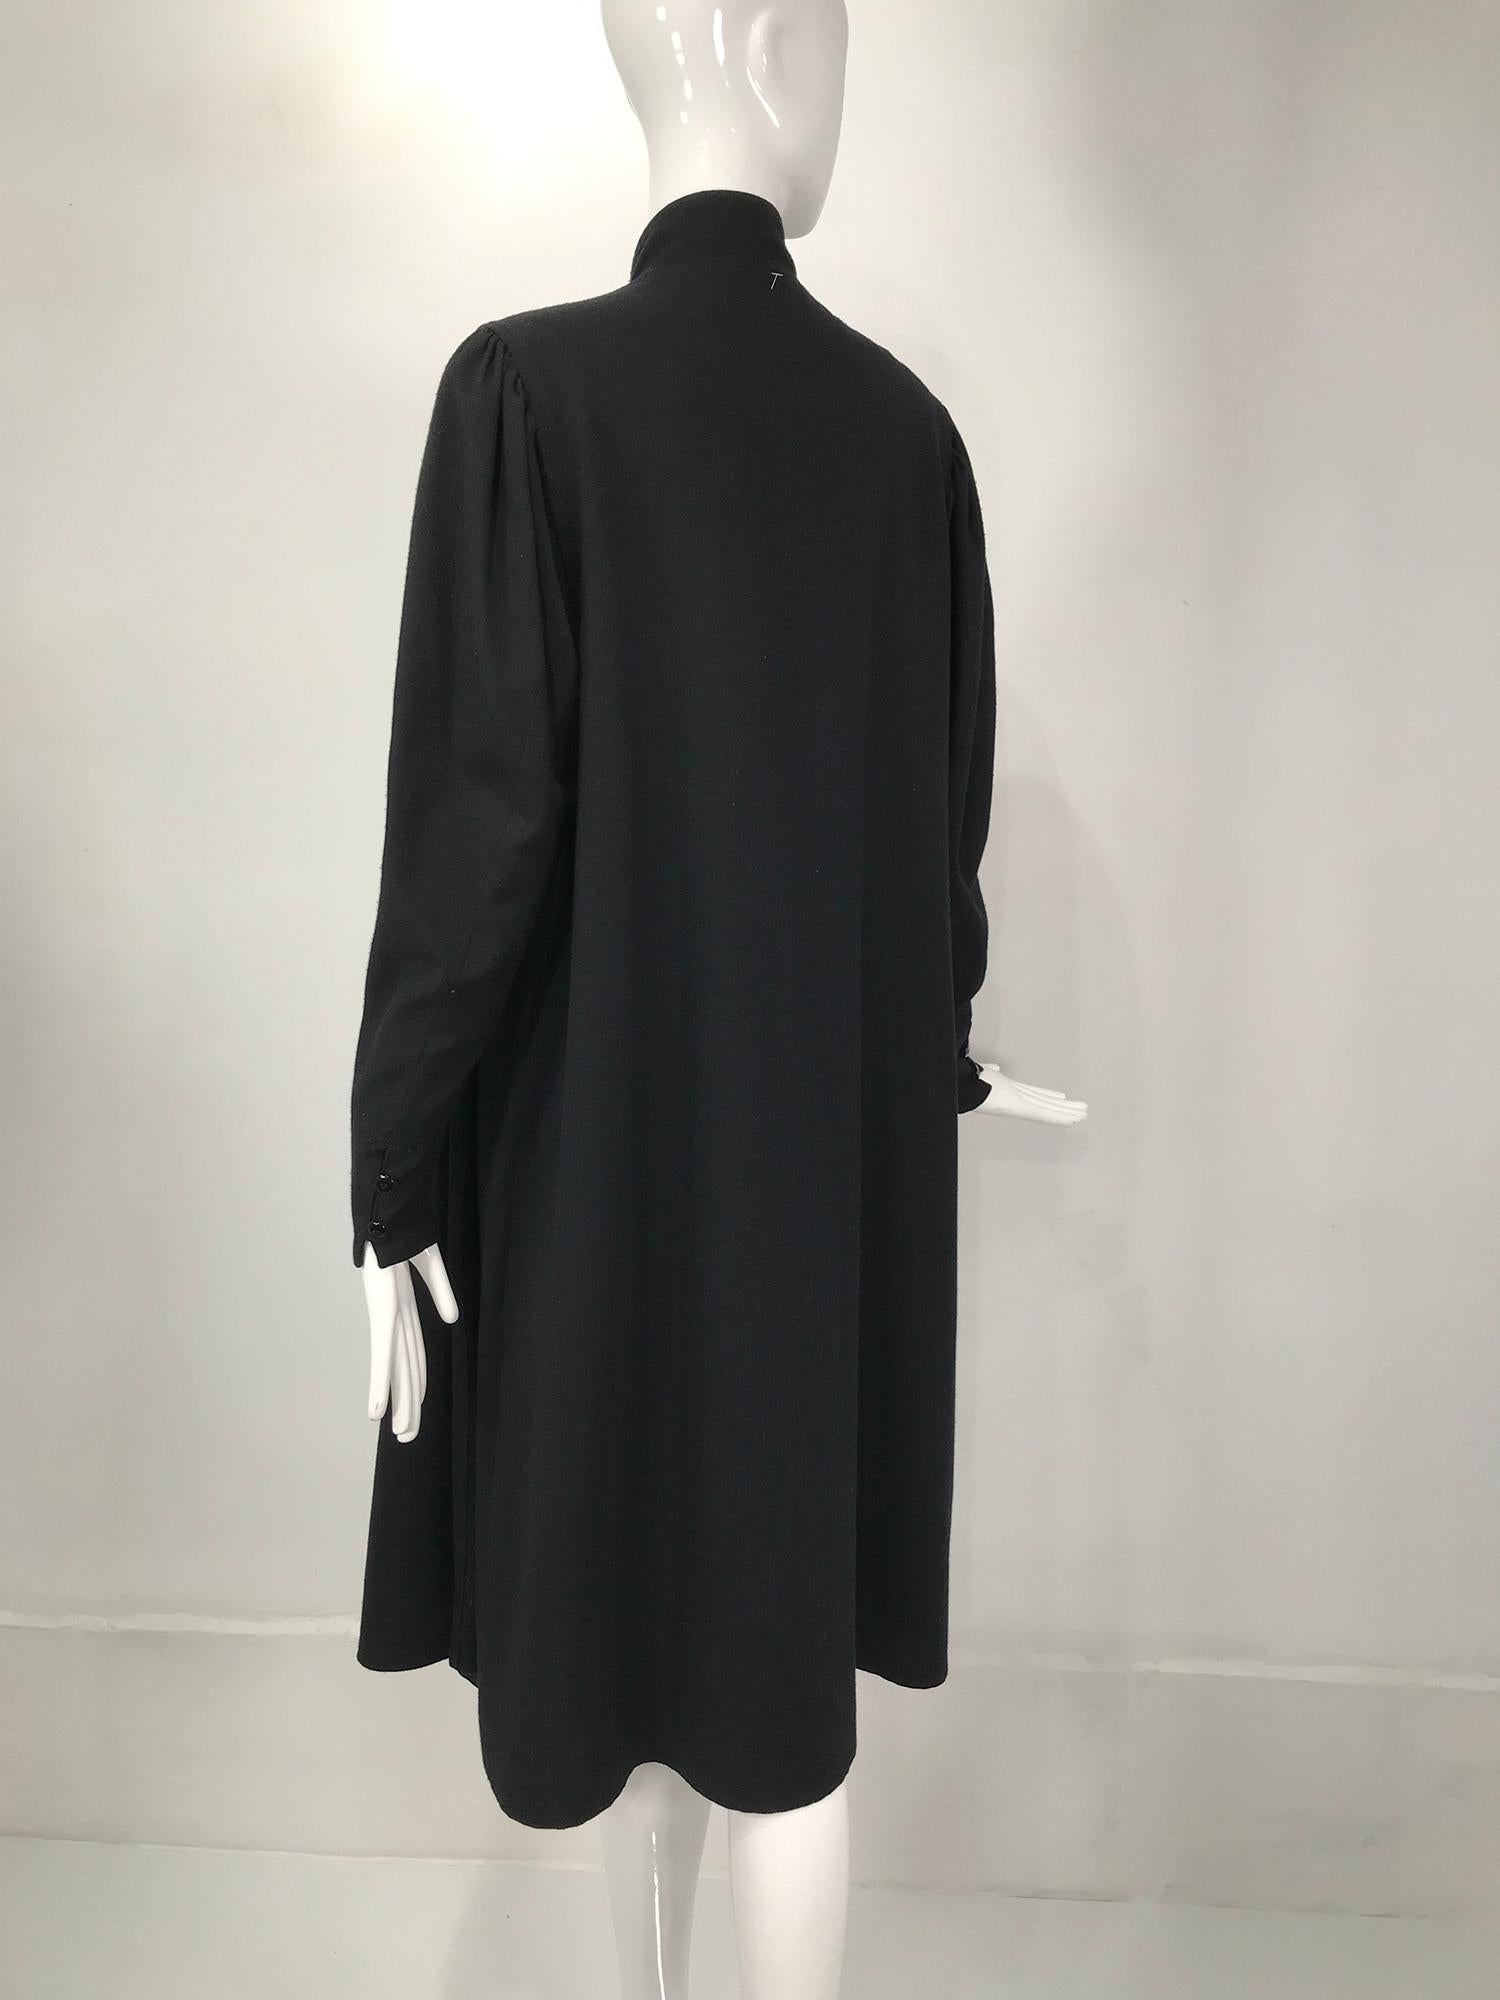 Kenzo Double Face Black Wool Cheongsam Style Coat 1980s For Sale 2